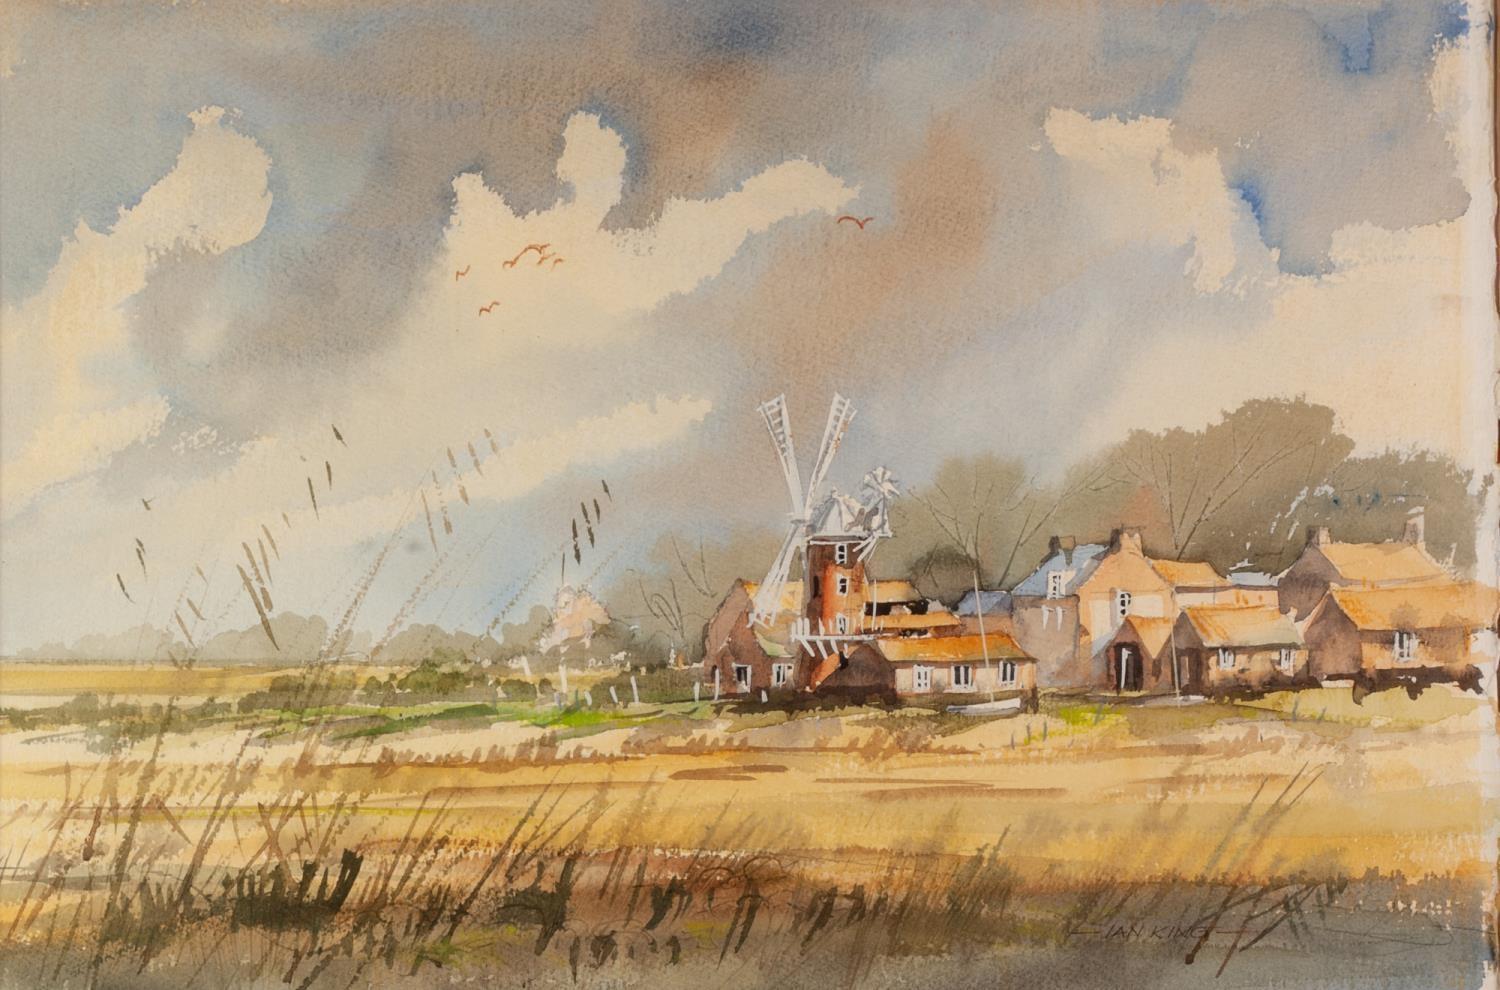 IAN KING (TWENTIETH/ TWENTY FIRST CENTURY) WATERCOLOUR DRAWING Landscape with windmill and farm